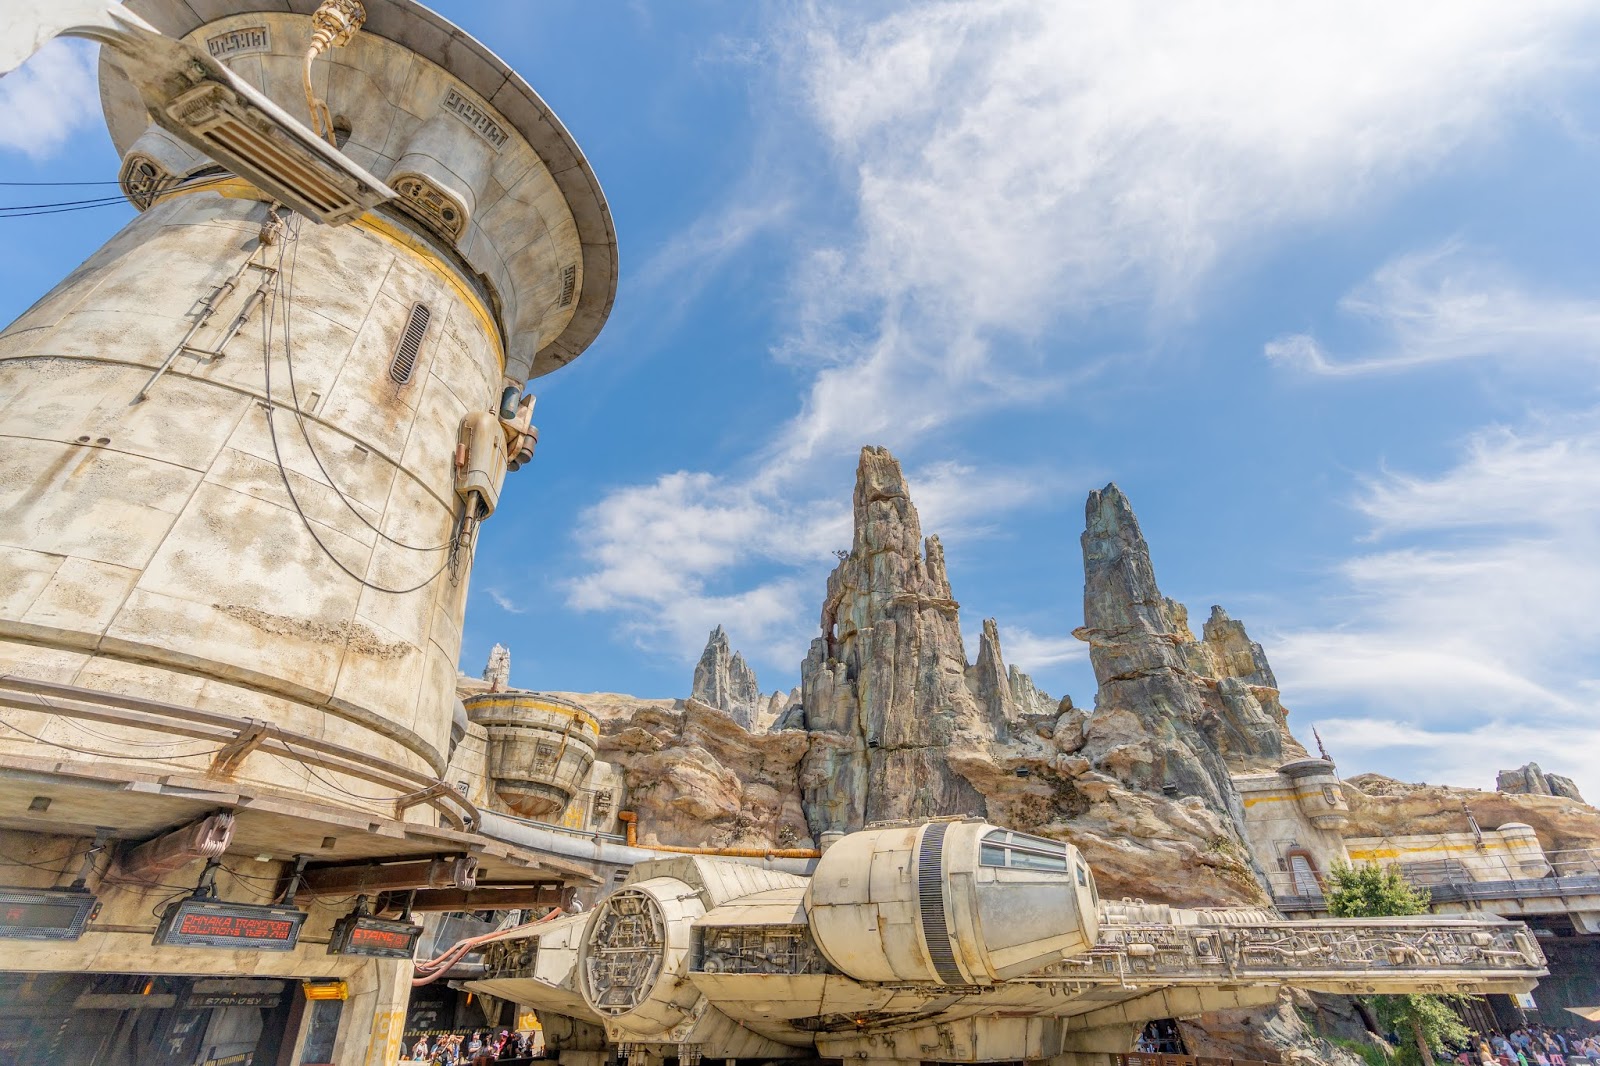 Disneyland Park: Star Wars Galaxy's Edge Oga's Cantina — Disney